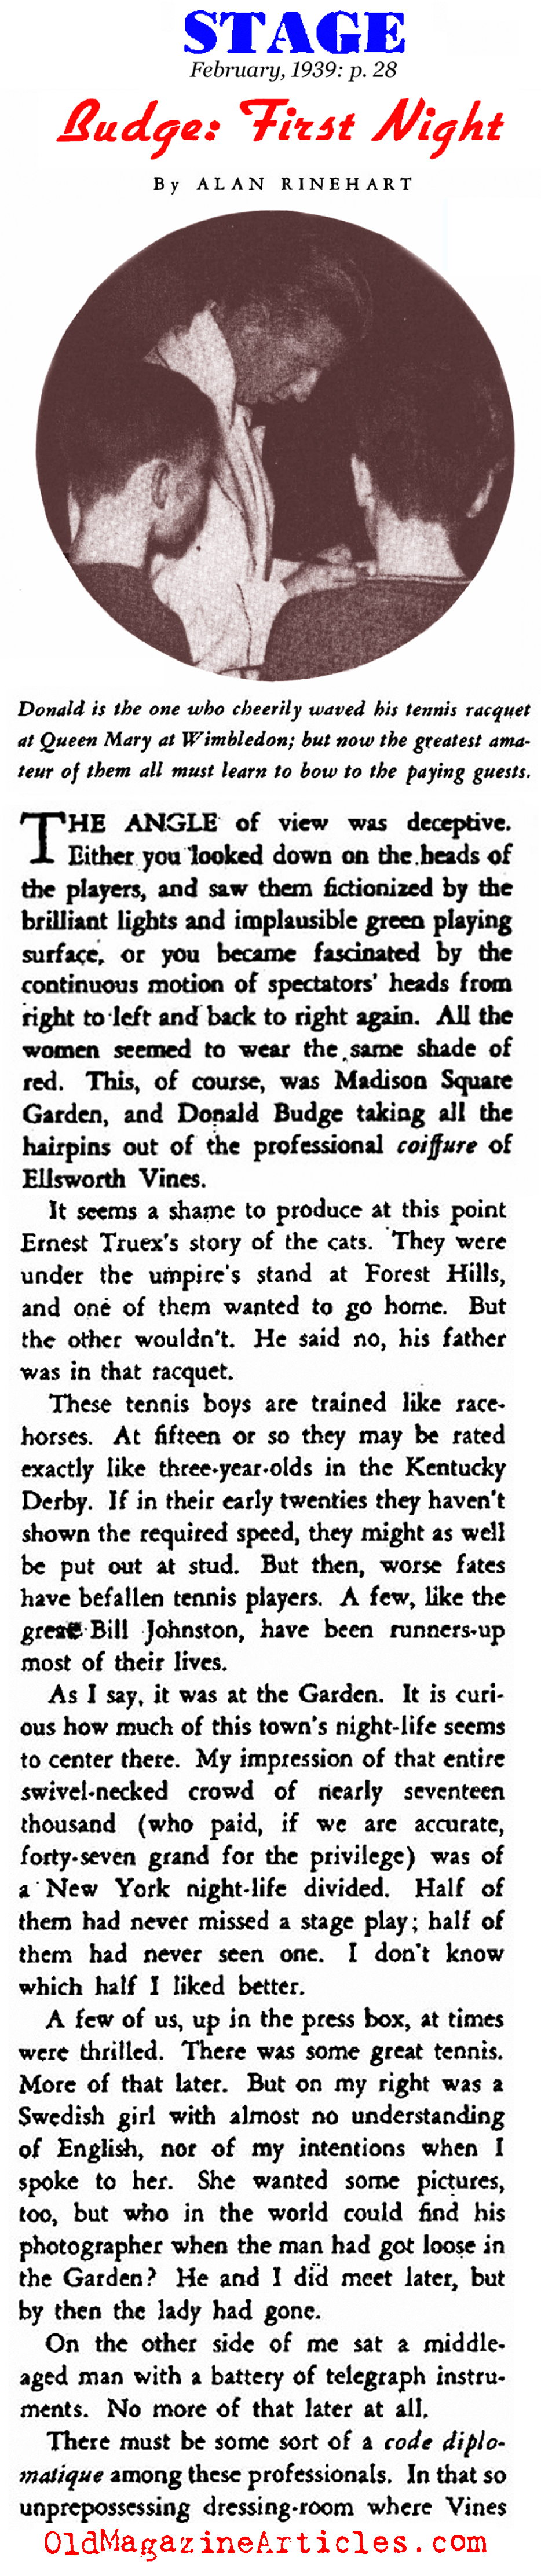 Donald Budge: 1940s Tennis Champ (Stage Magazine, 1939)